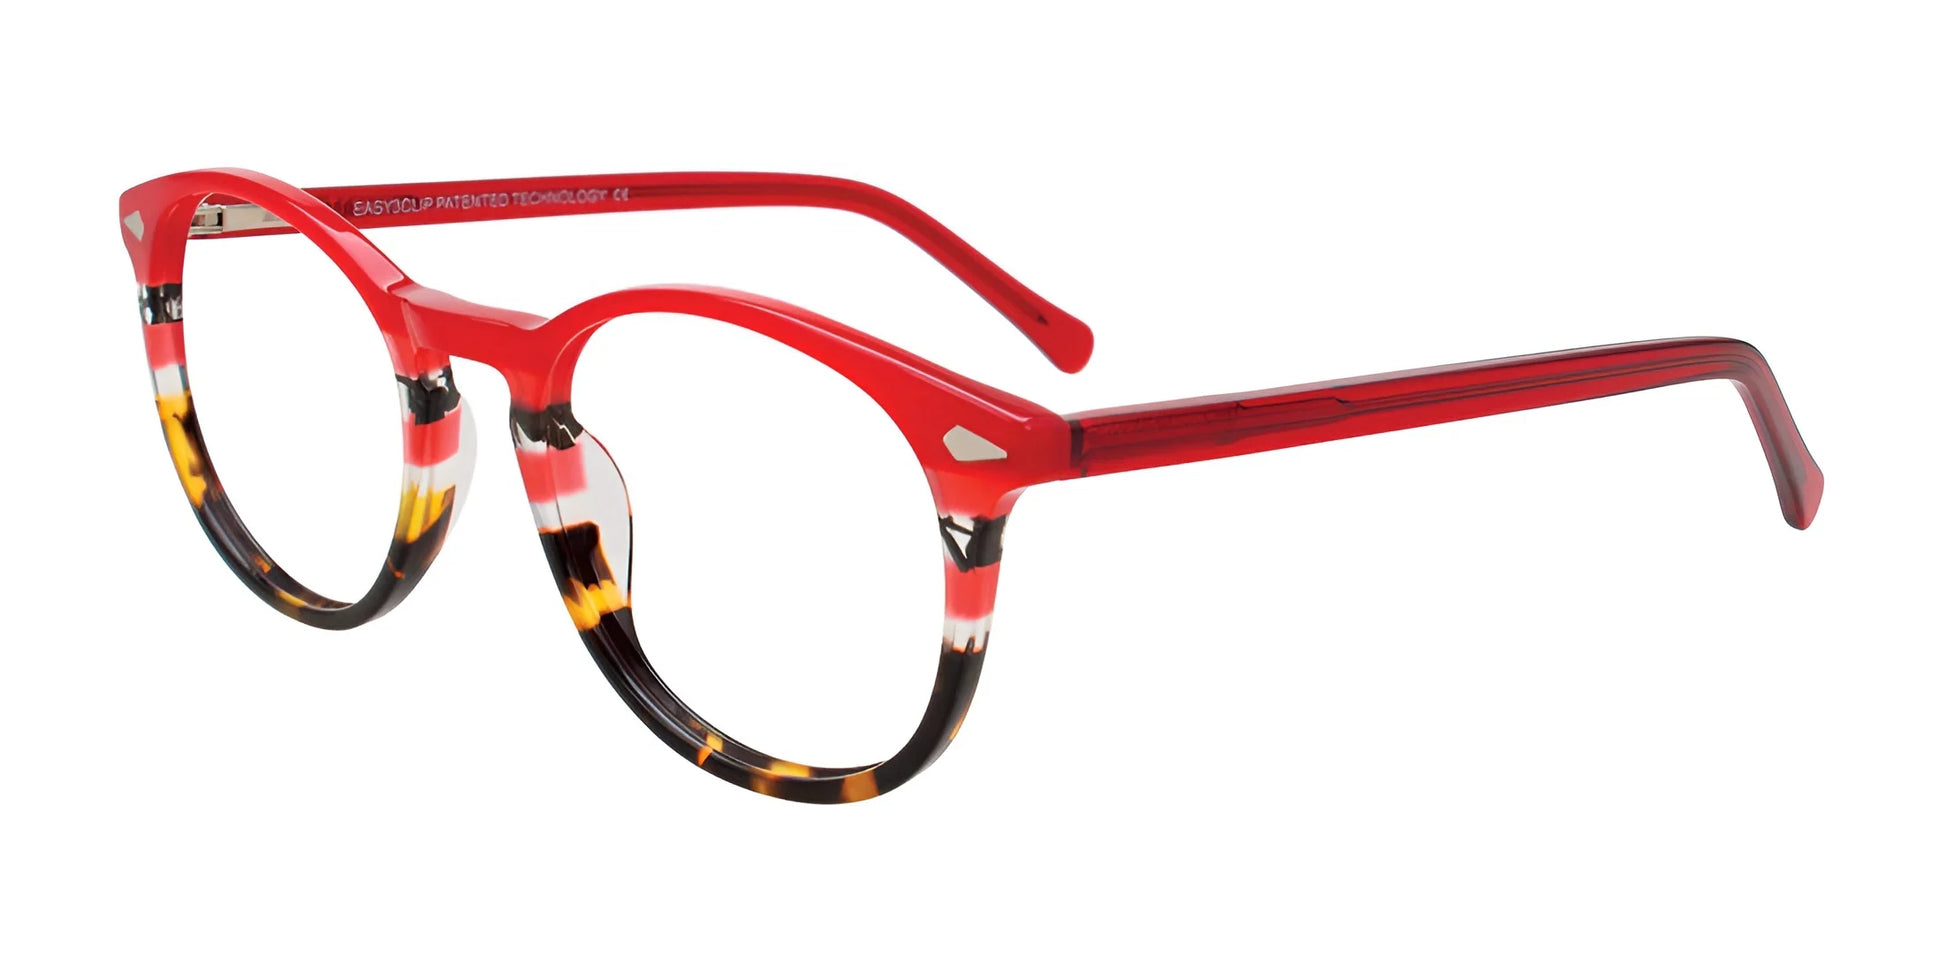 EasyClip EC698 Eyeglasses with Clip-on Sunglasses Red & Tortoise